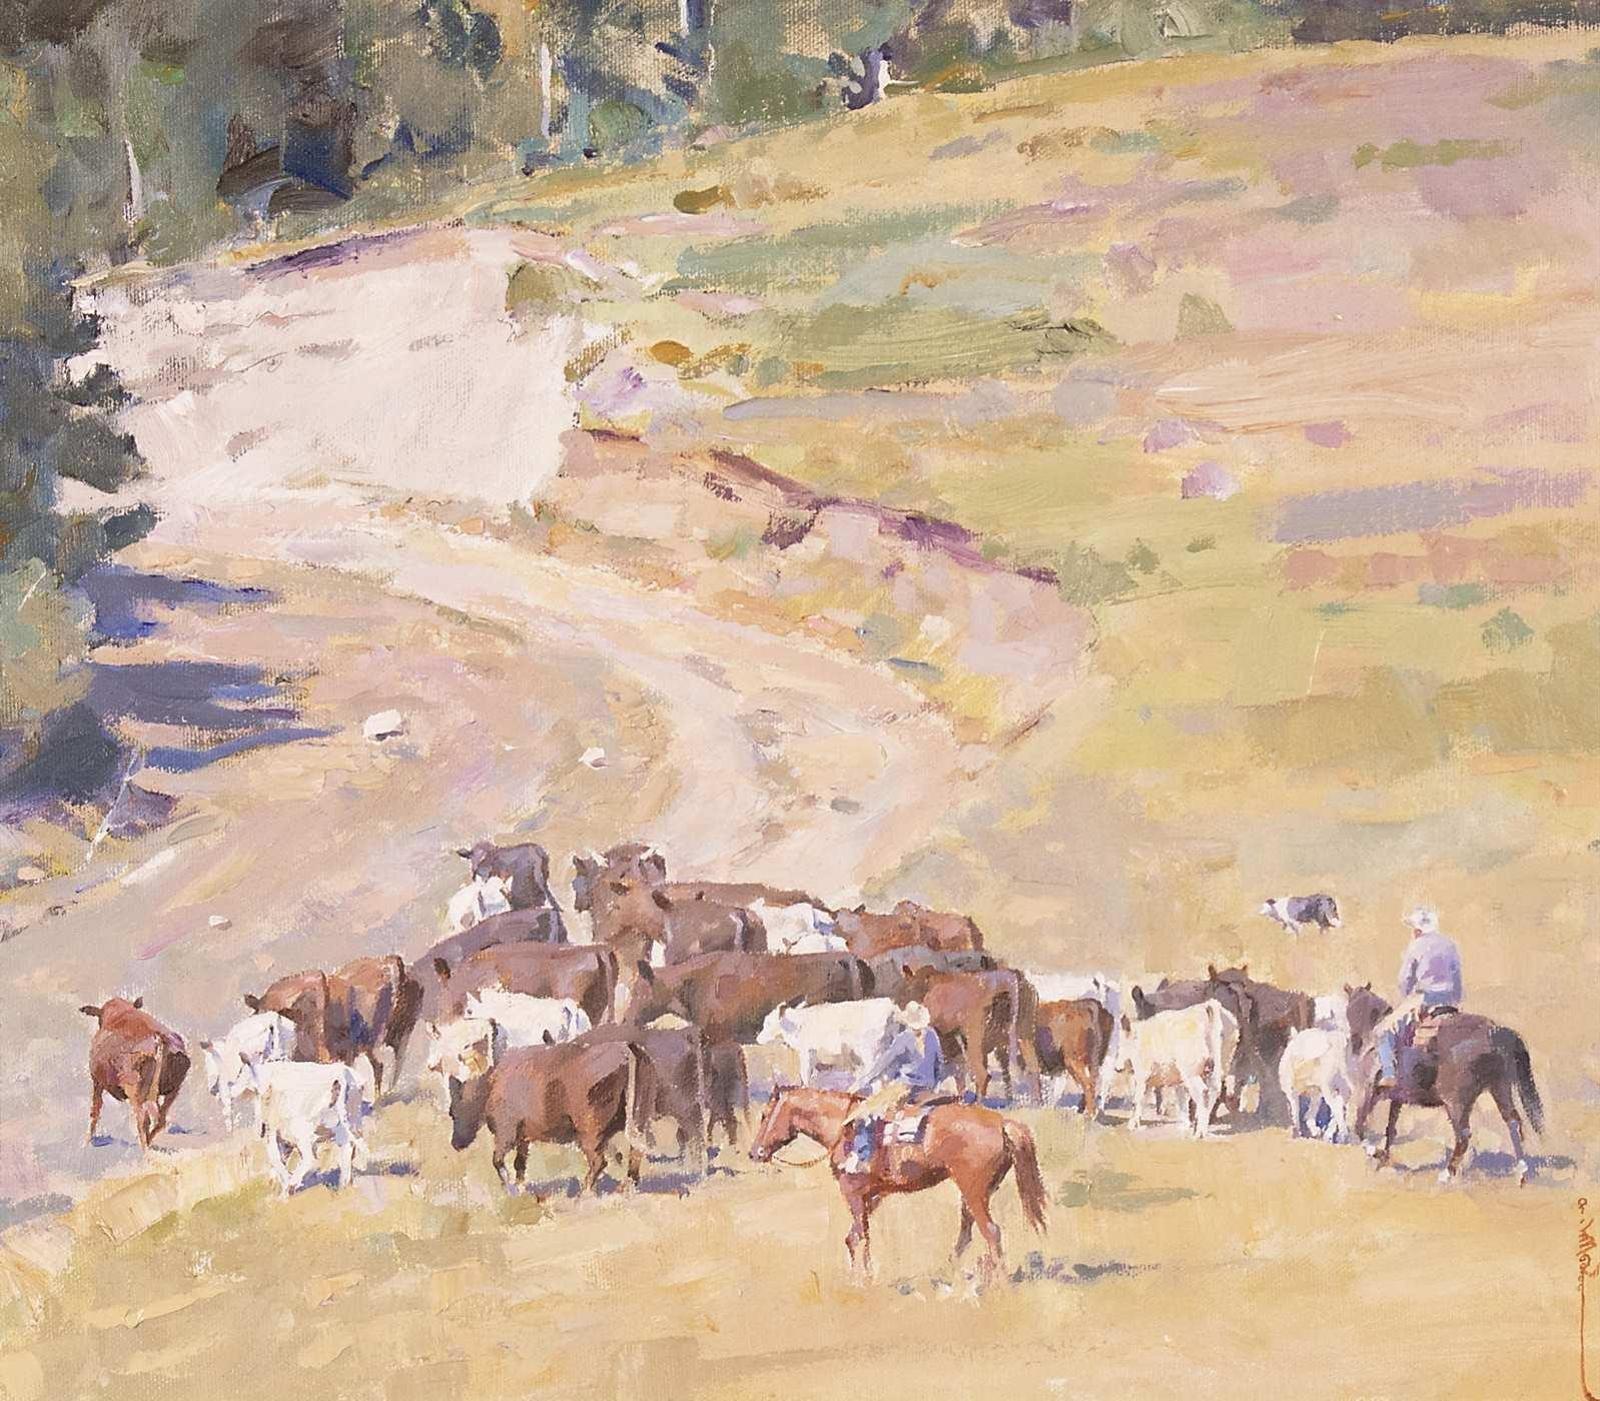 Enkhbold Dambadarjaa (1966) - Herders